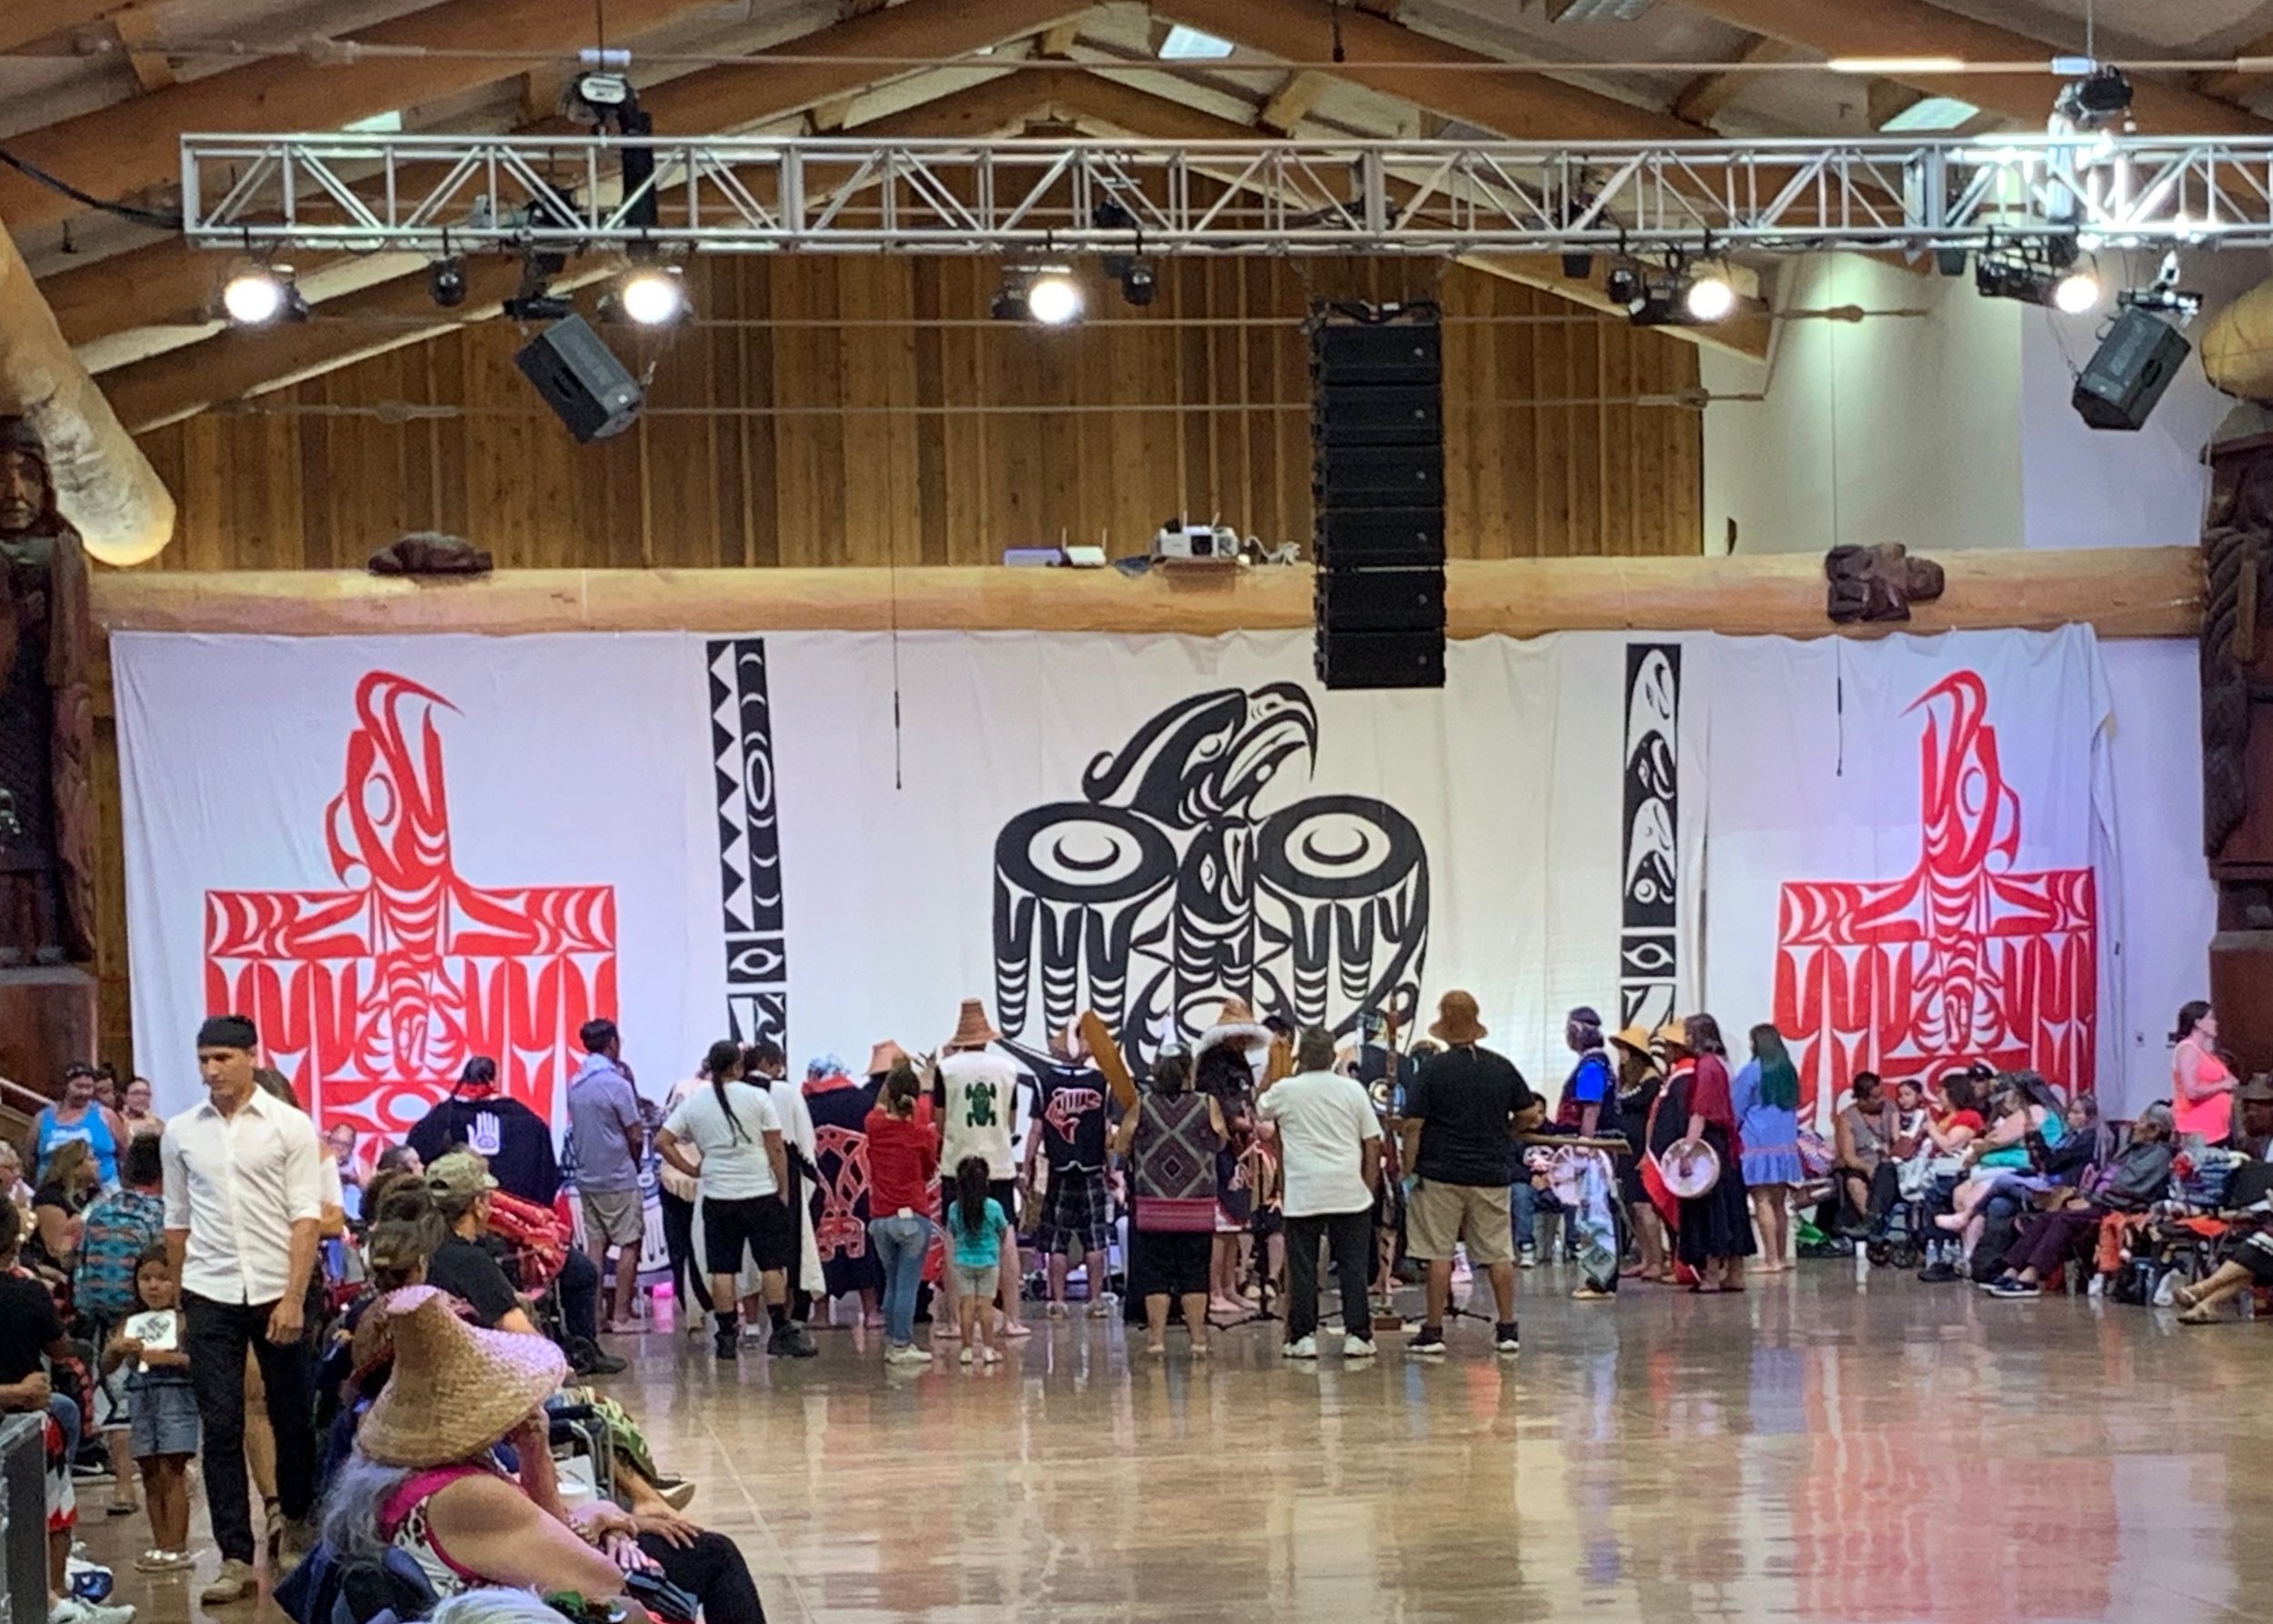 Tlingit, Tsimshian, and Haida Native Alaskan Tribes present to the Lummi Nation at Paddle to Lummi 2019. Photo by Aaron Straight.